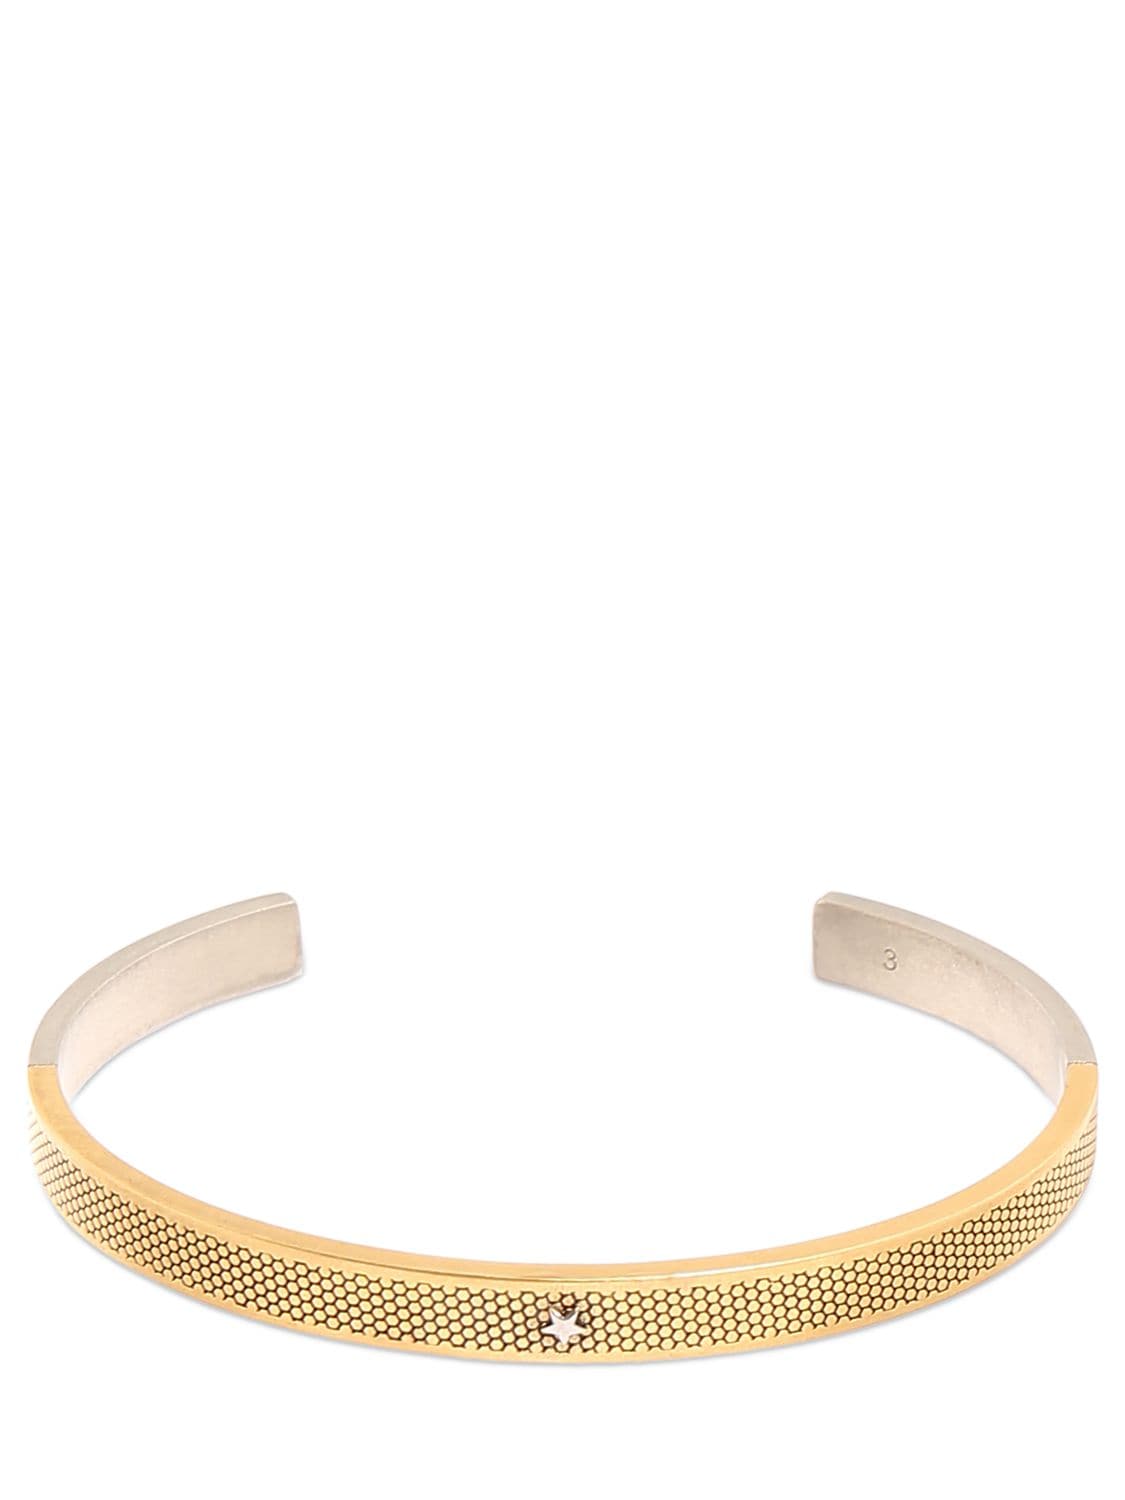 Maison Margiela Engraved Cuff Bracelet W/ Star In Gold,silver